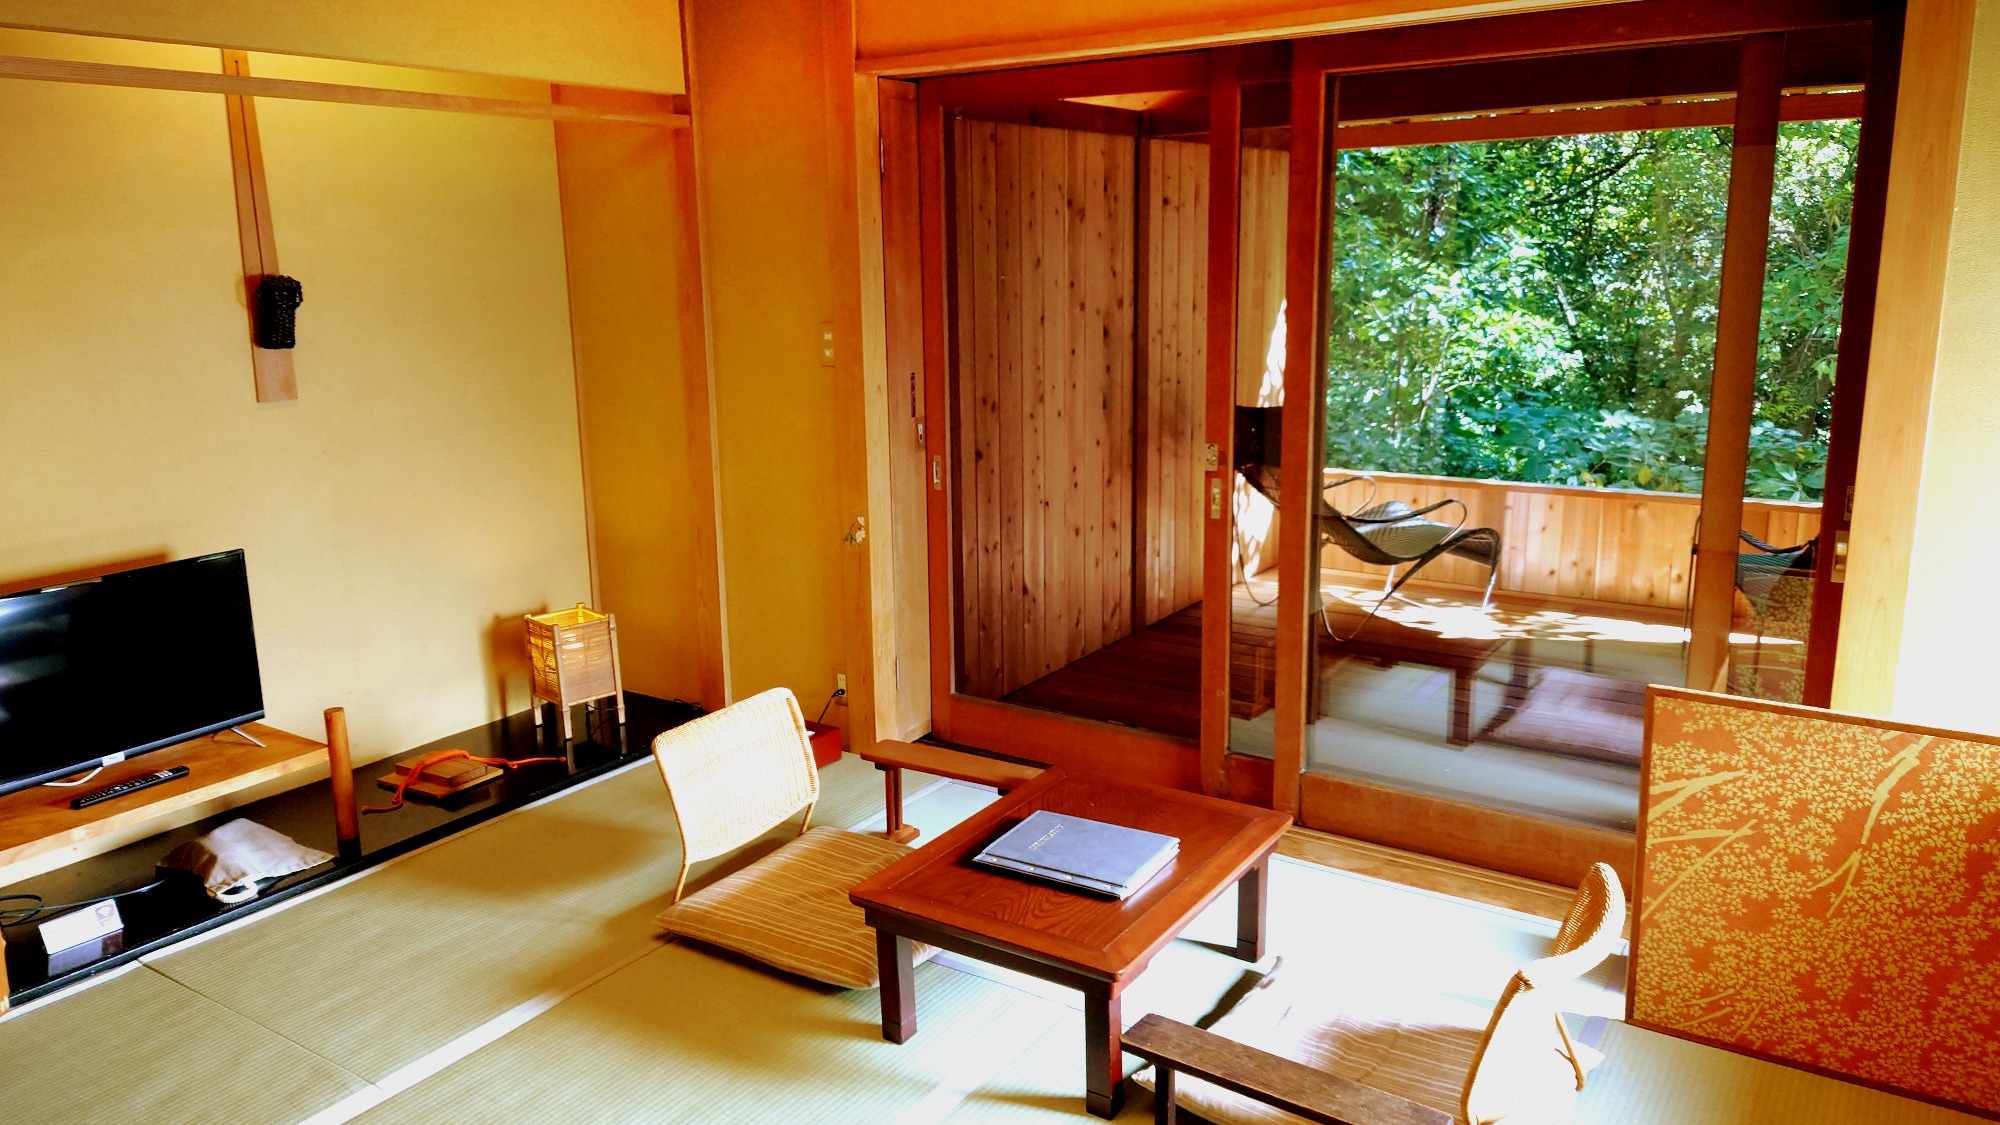 ◆ Small Japanese-style room A 503 "Norinaga"